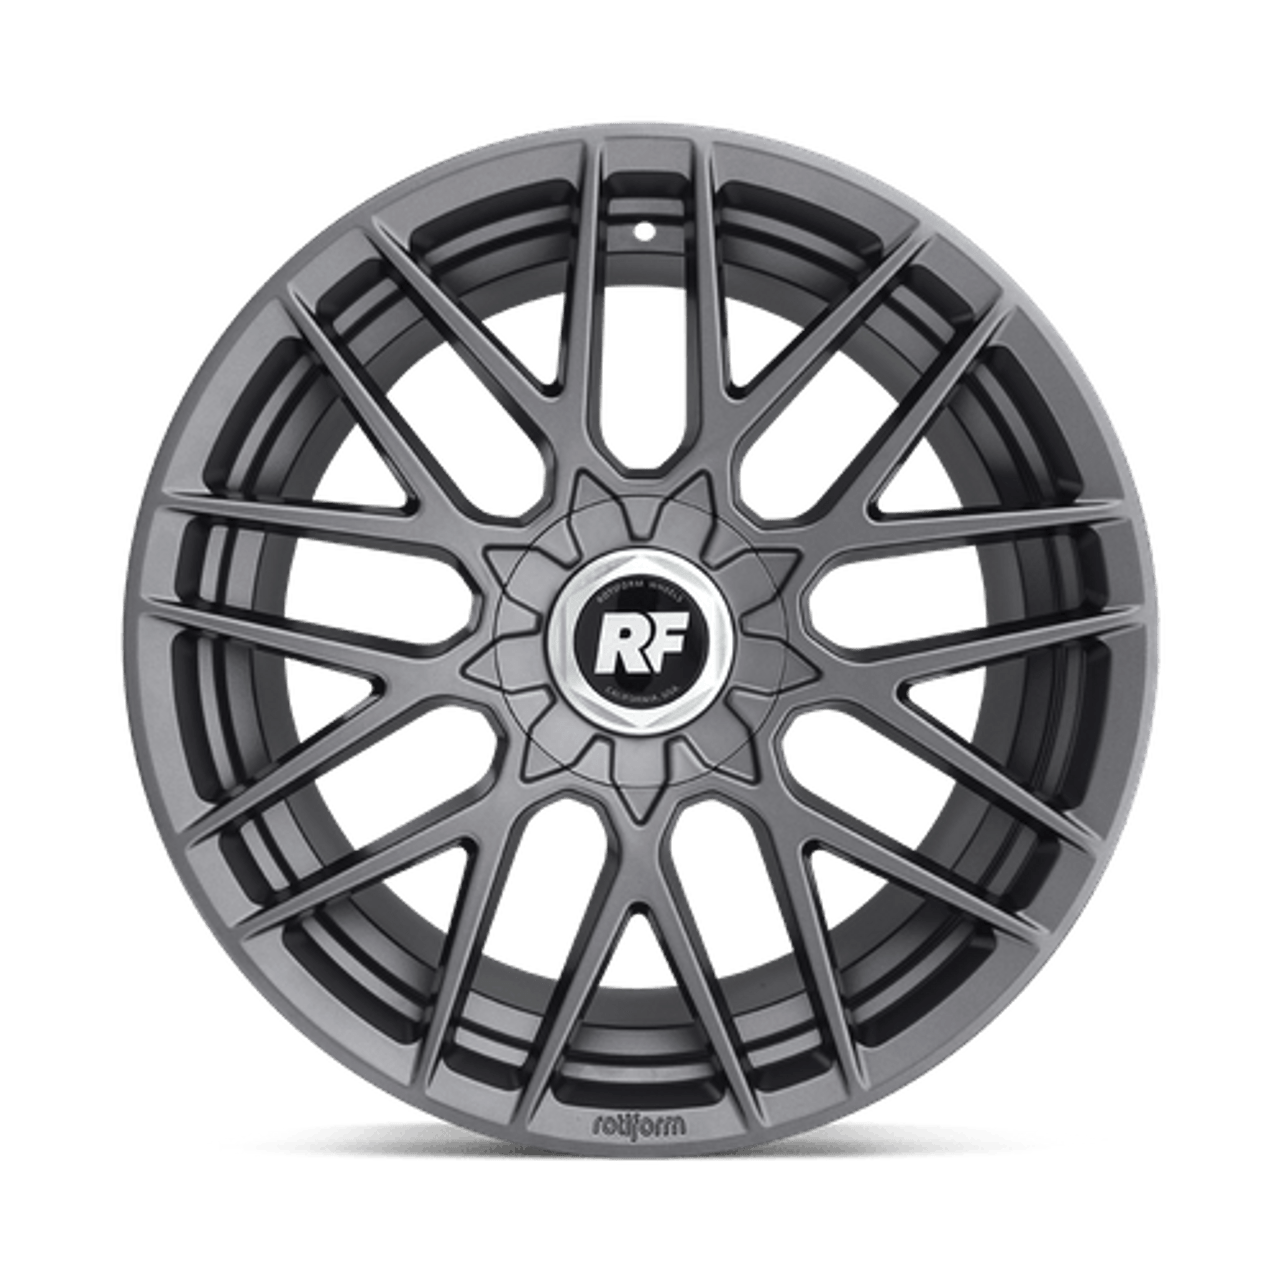 Rotiform R141 RSE Wheel 18x8.5 5x108/5x114.3 45 Offset - Matte Anthracite